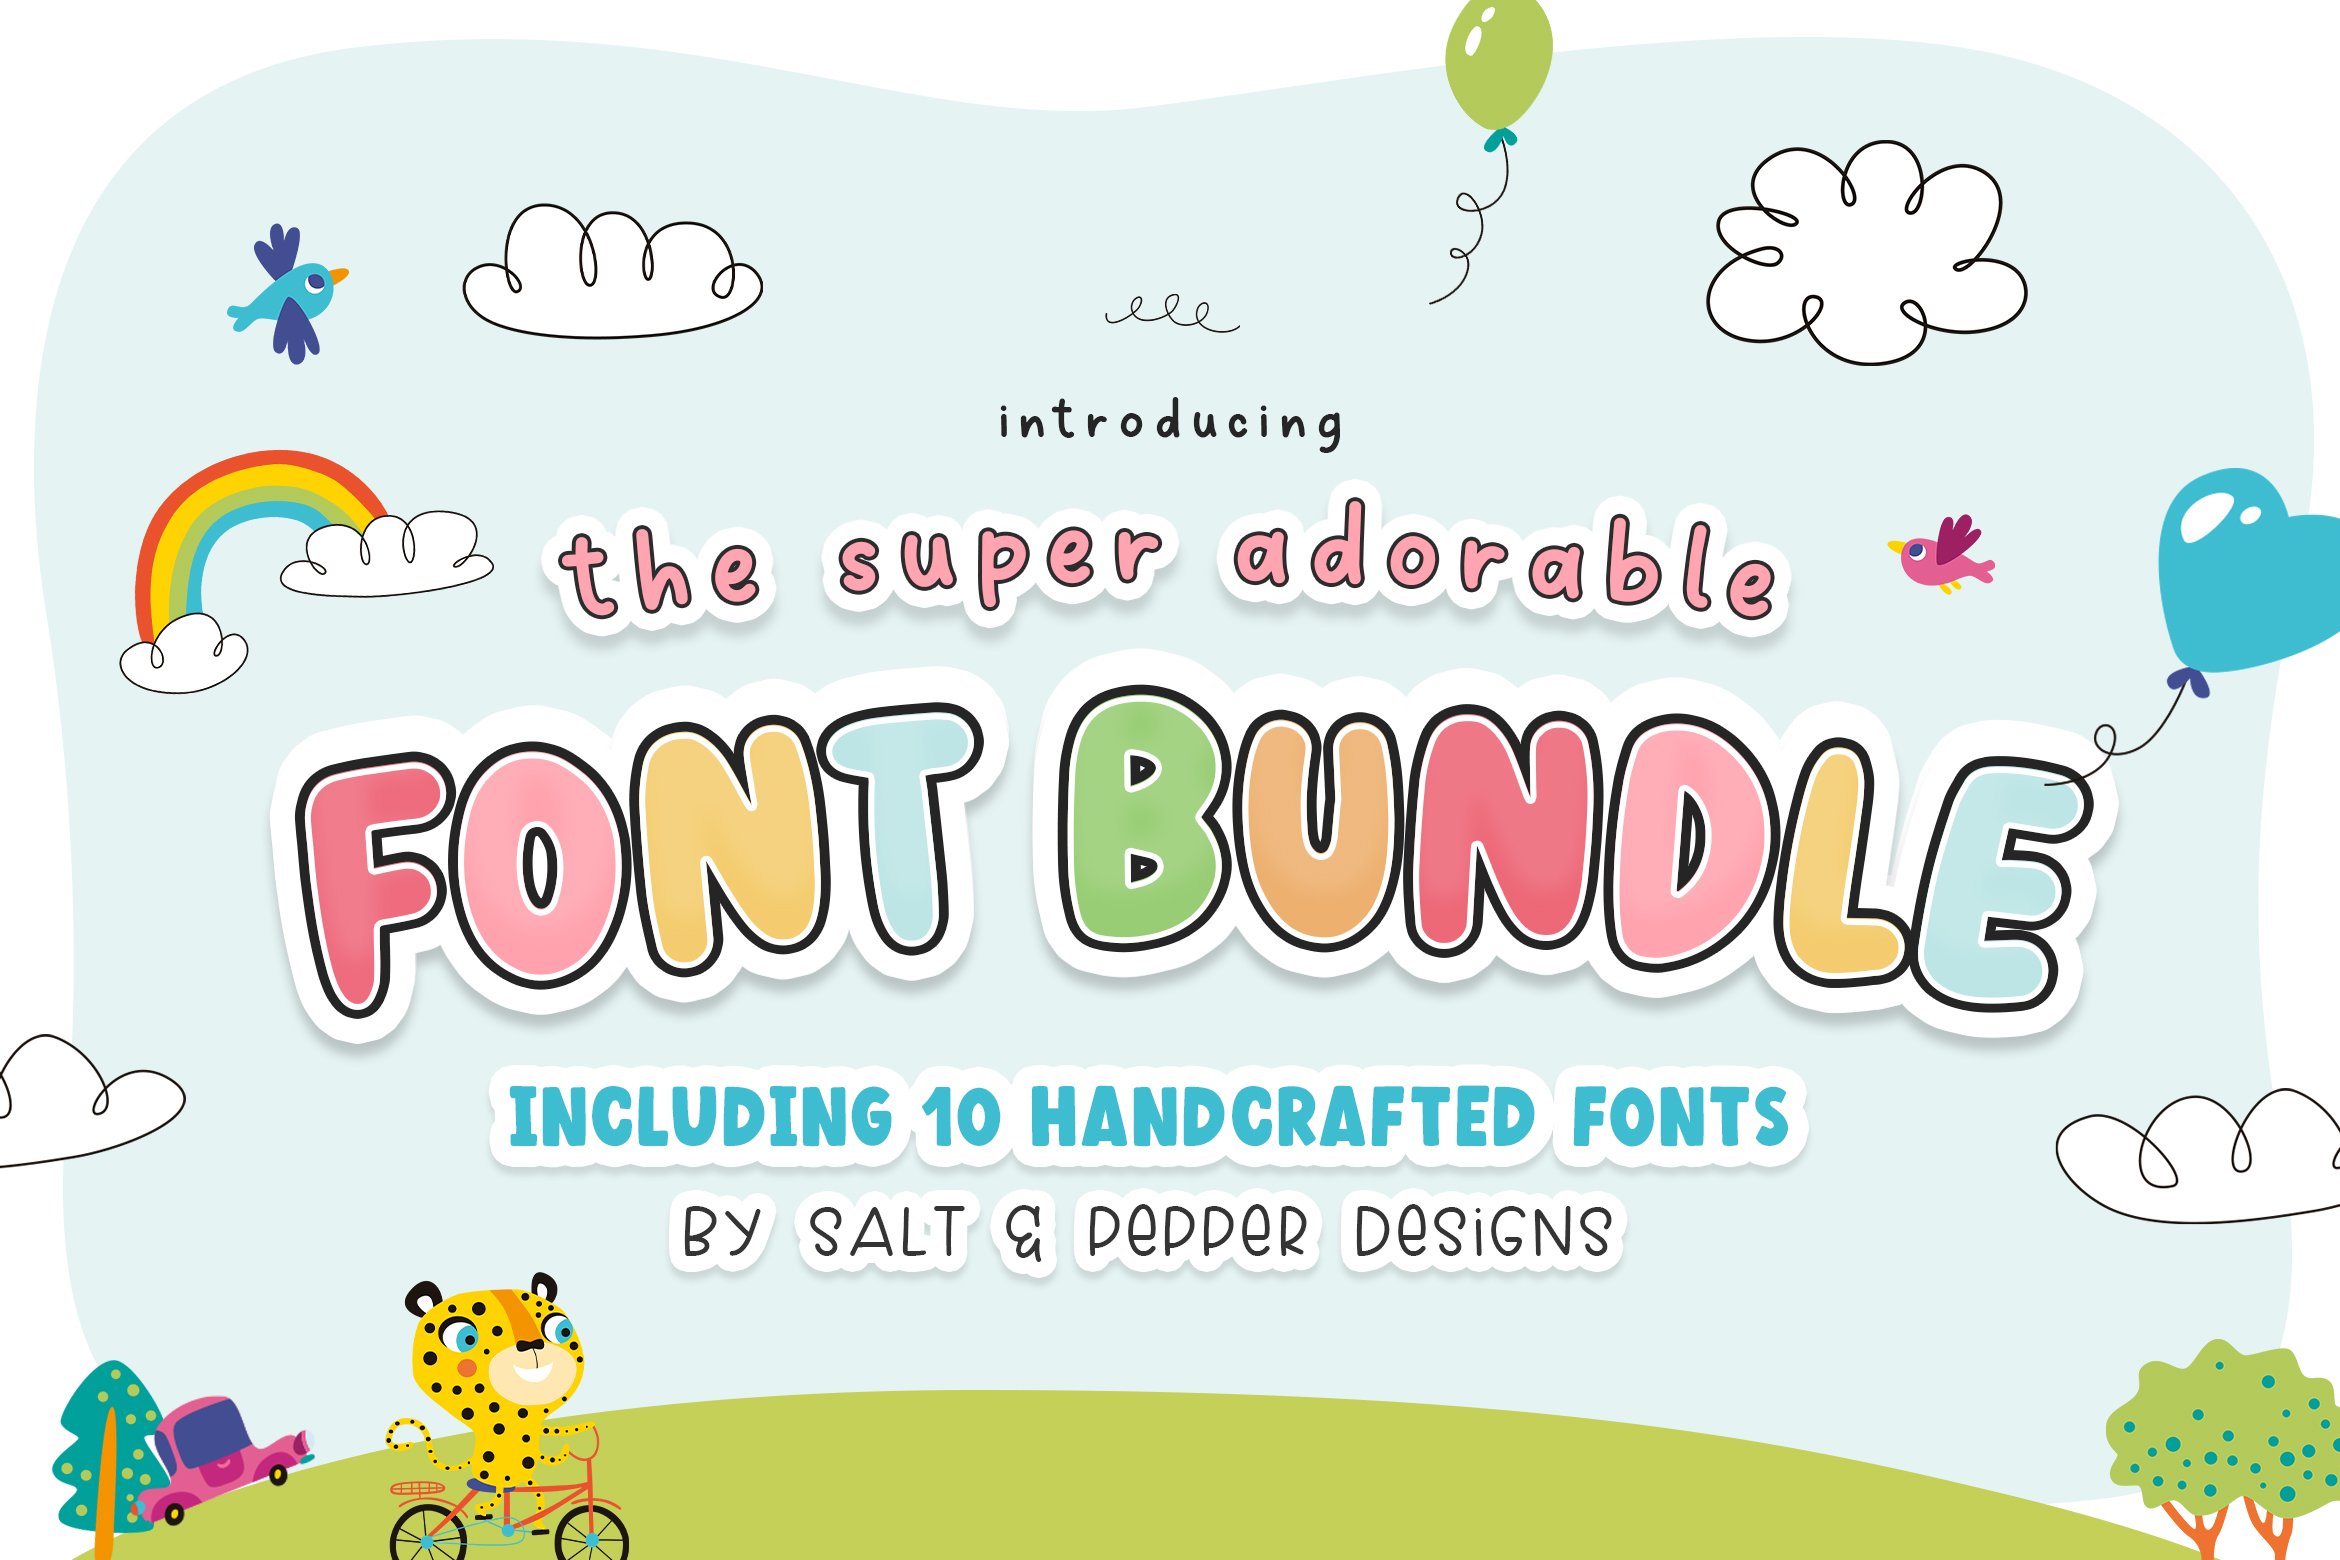 The Adorable Font Bundle (10 Fonts) cover image.